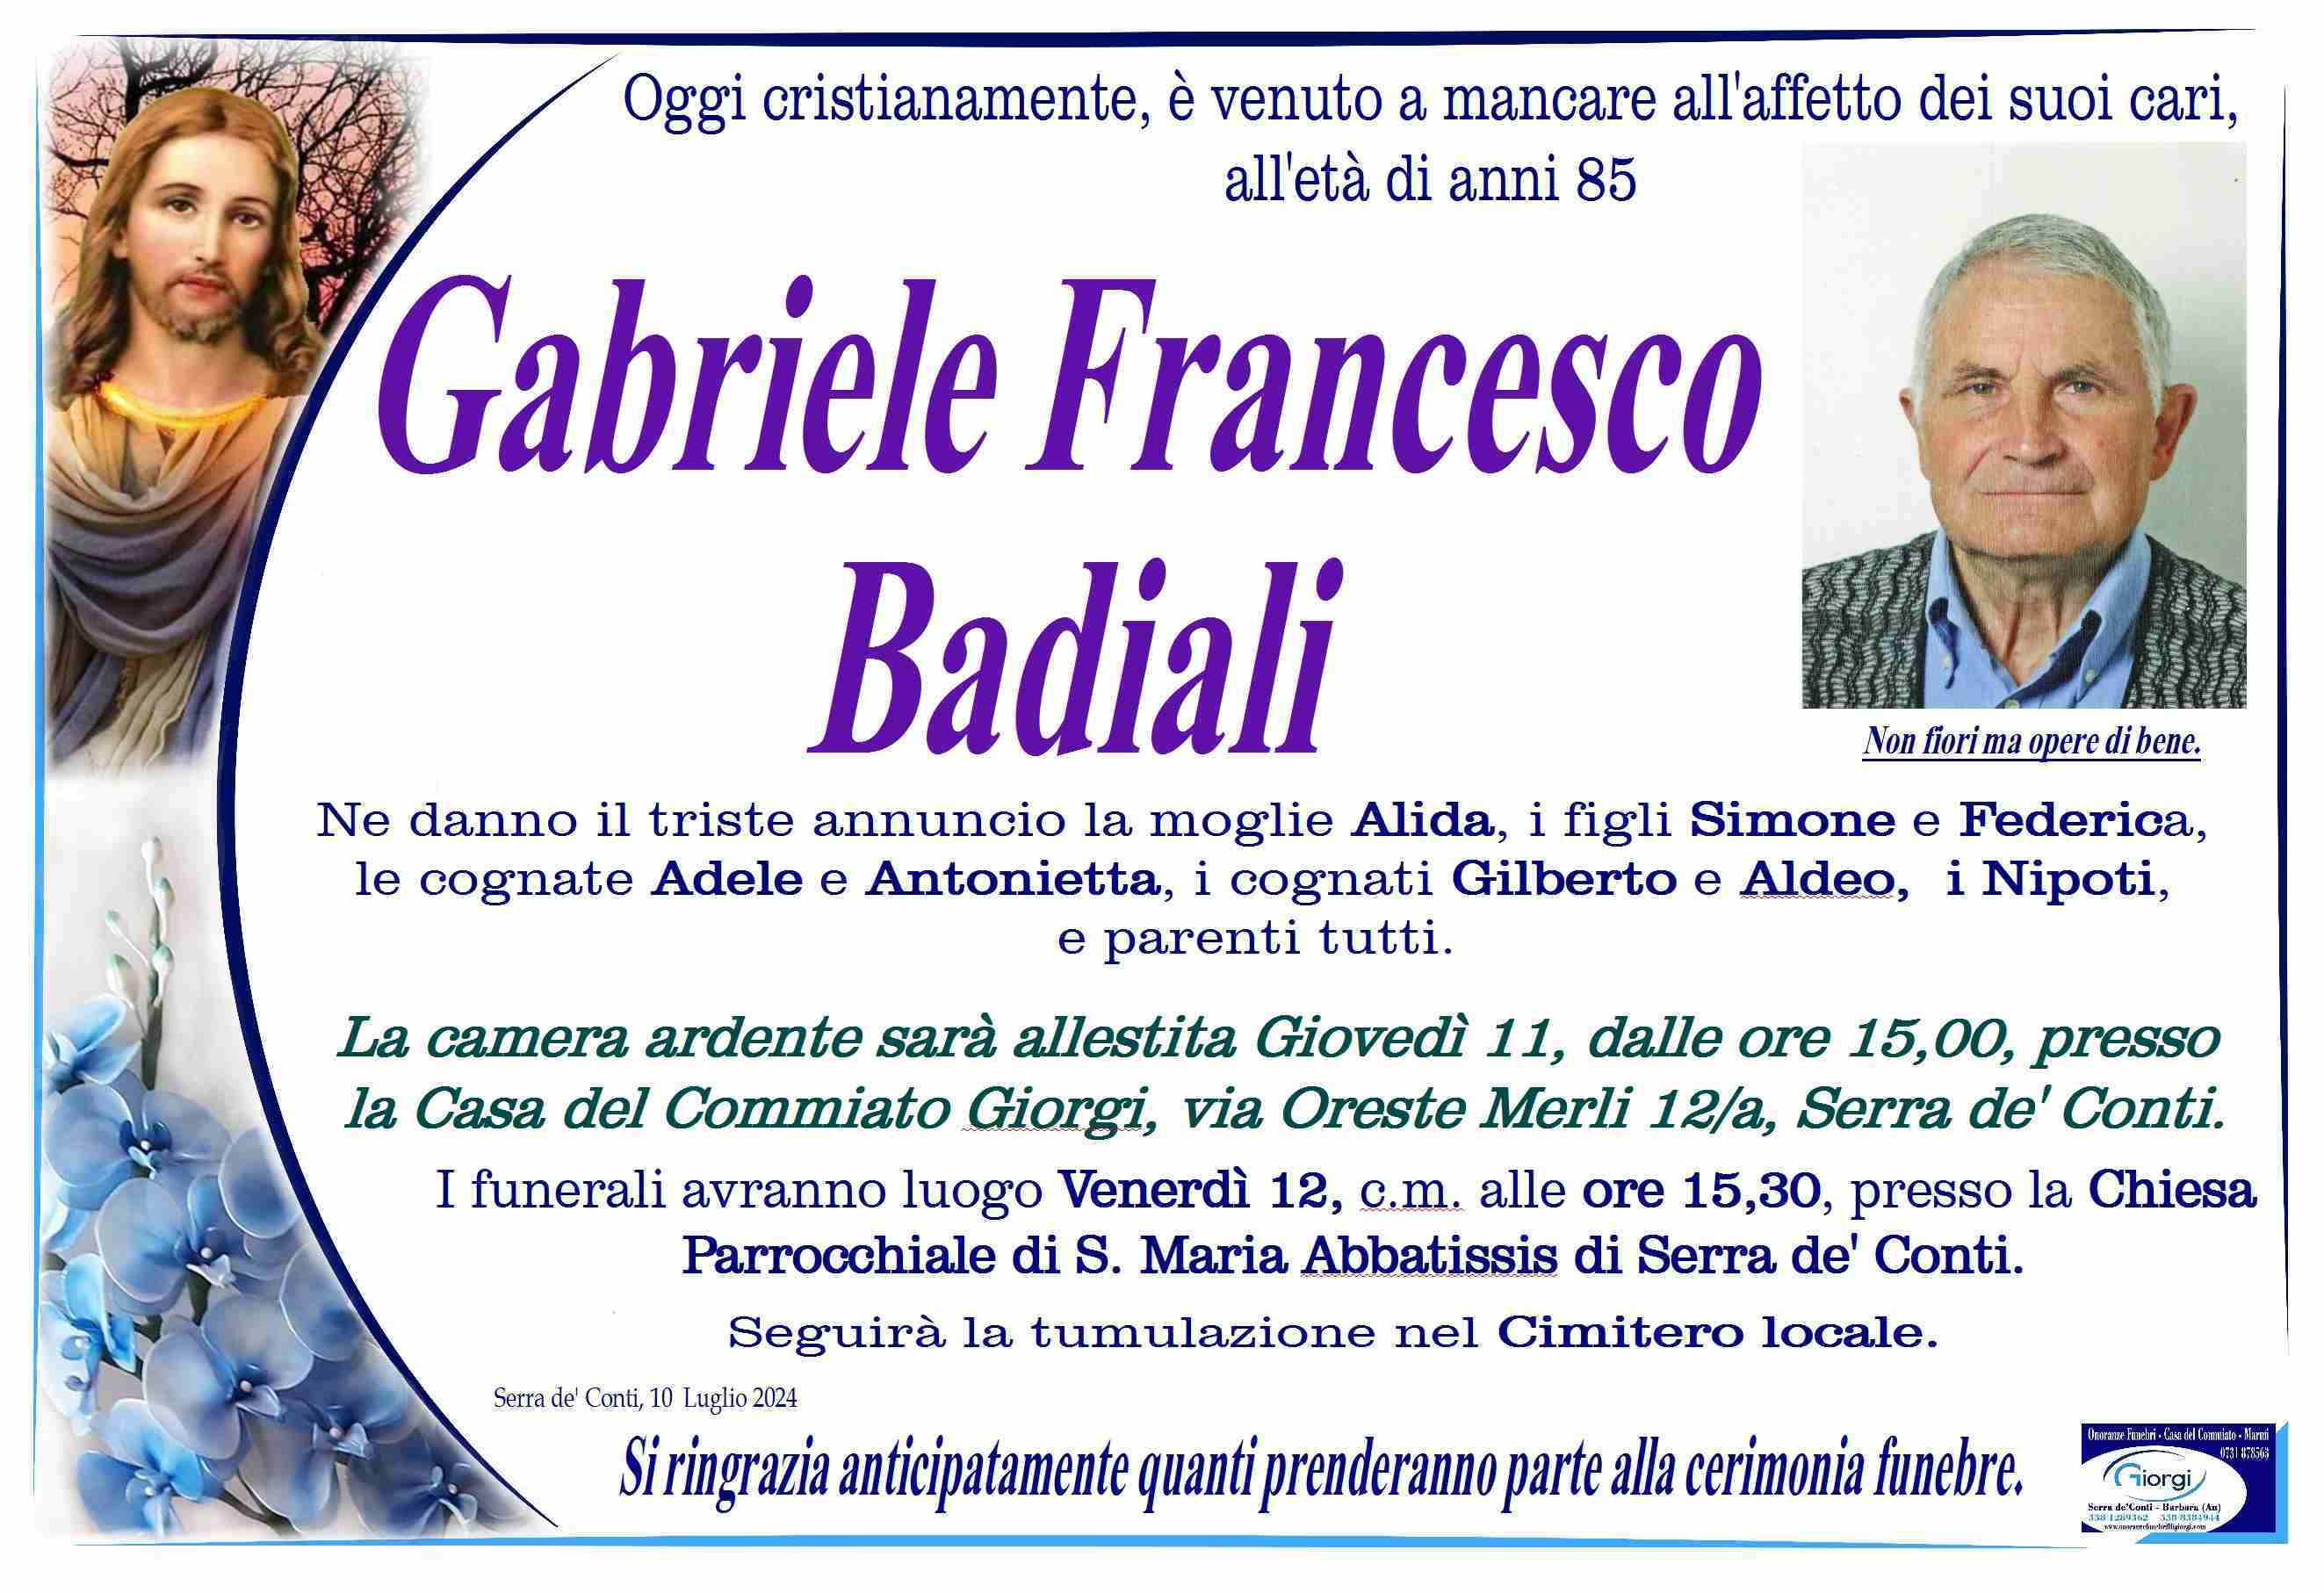 Gabriele Francesco Badiali